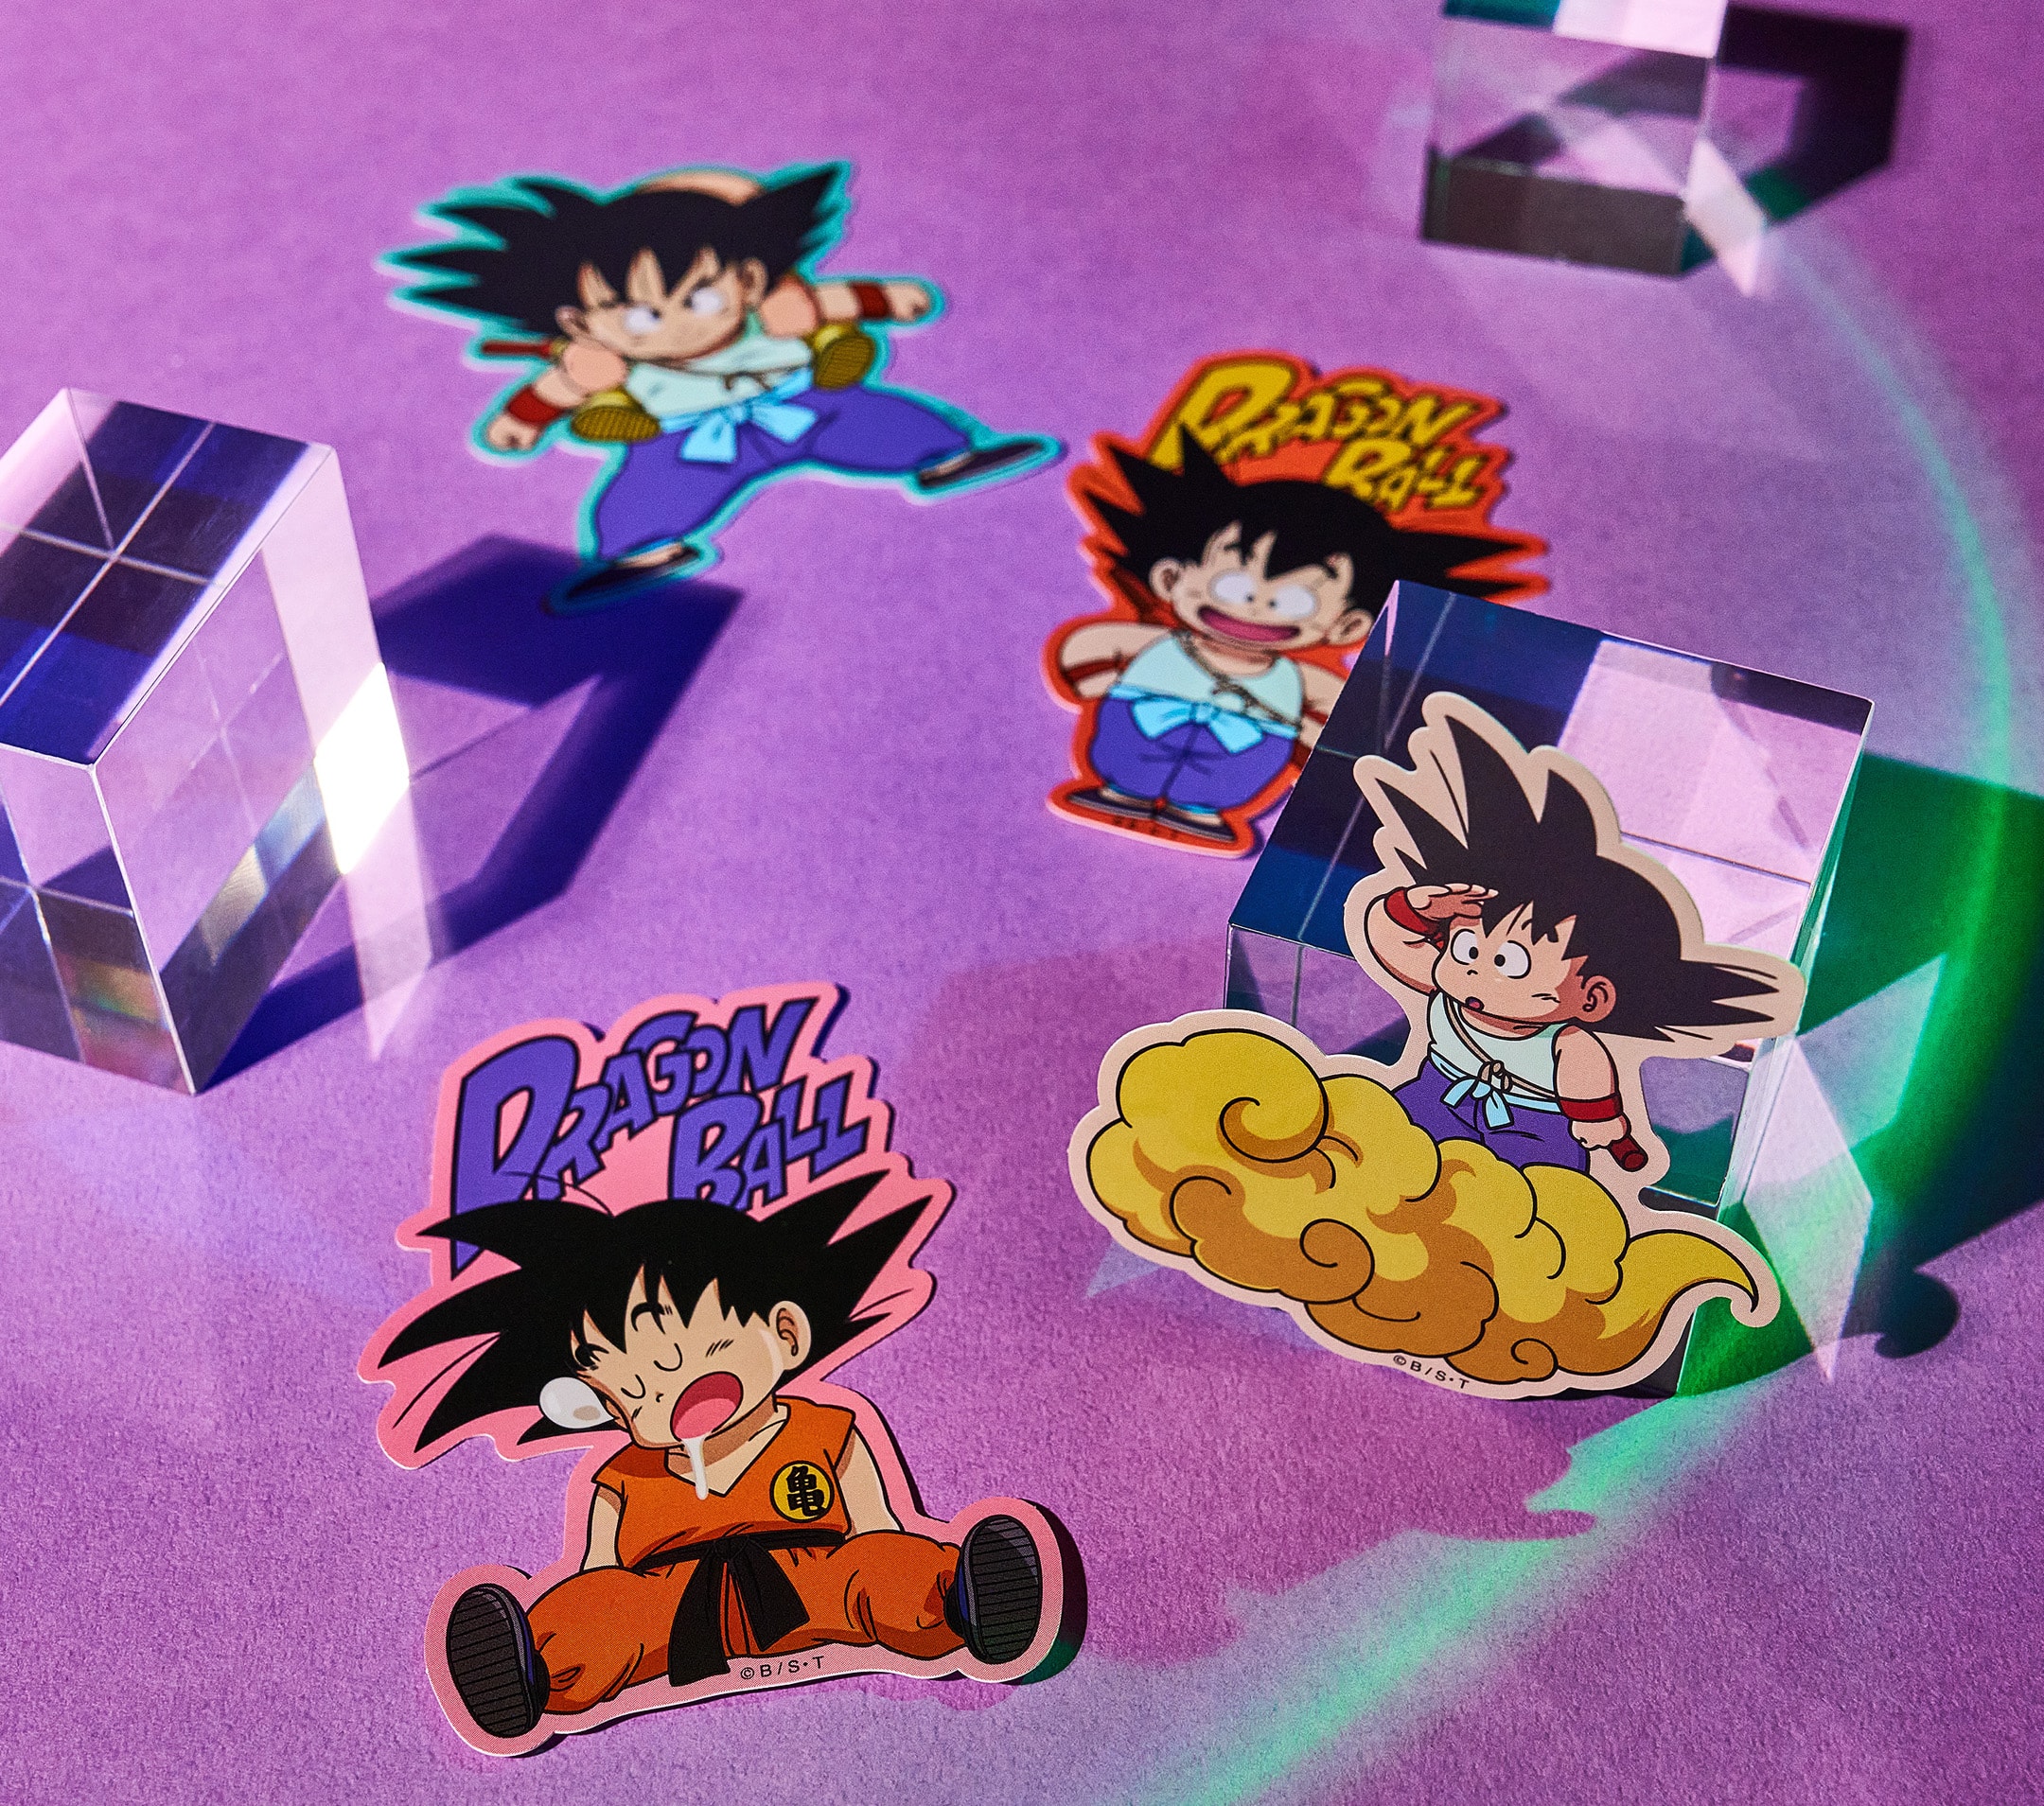 Retro Goku sticker, bonus item included in the box